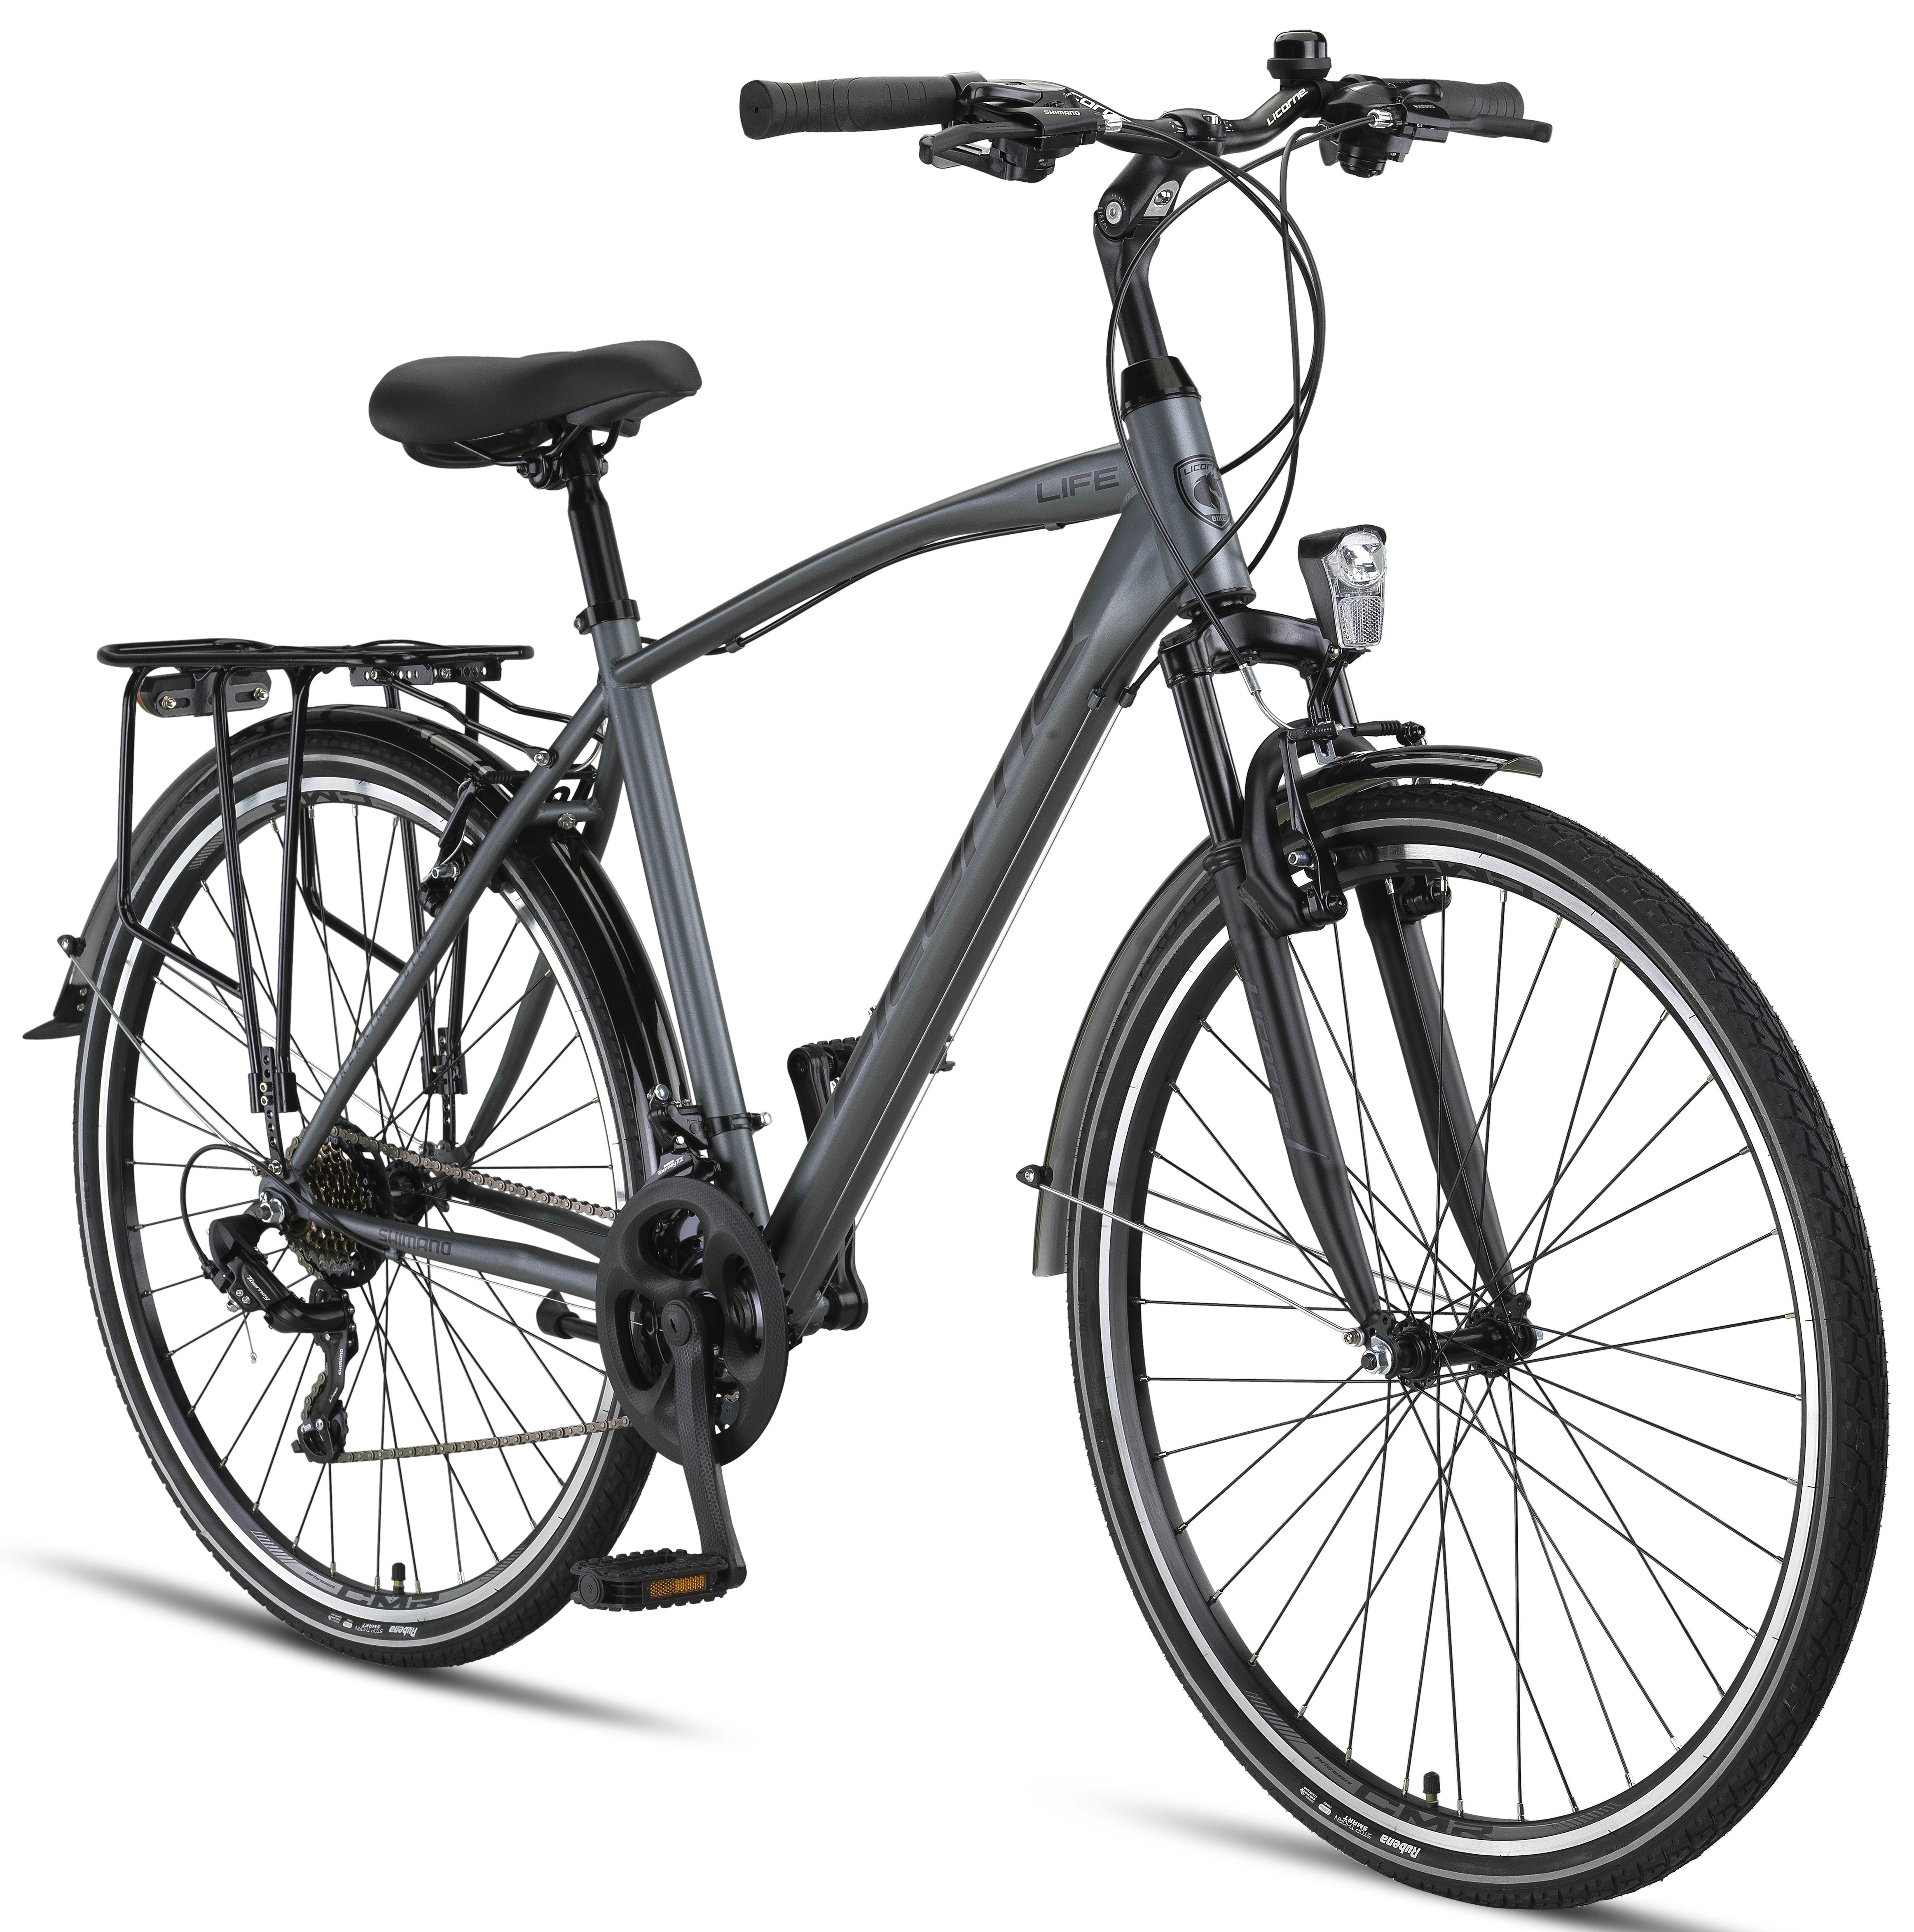 Licorne Bike Life M-V-ATB Premium Trekking Bike in 28 inch - Bicycle for men, boys, ladies and men - Shimano 21 speed shifting - Men's City Bike - Men's Bike